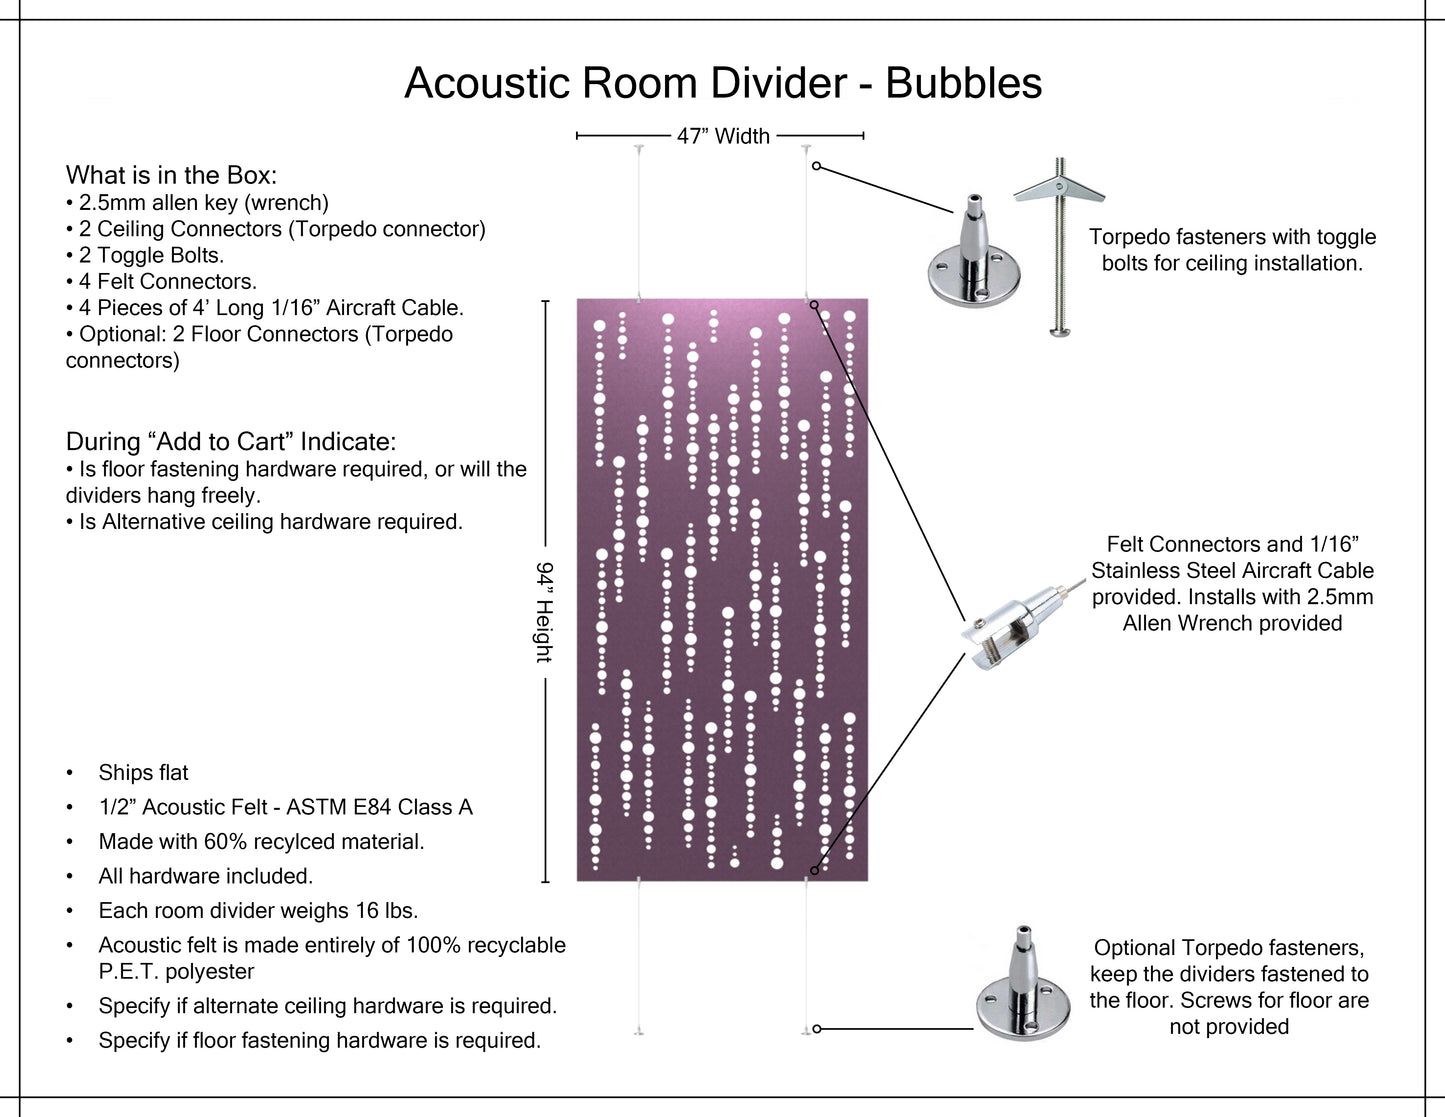 4x8 Acoustic Room Divider - Bubbles